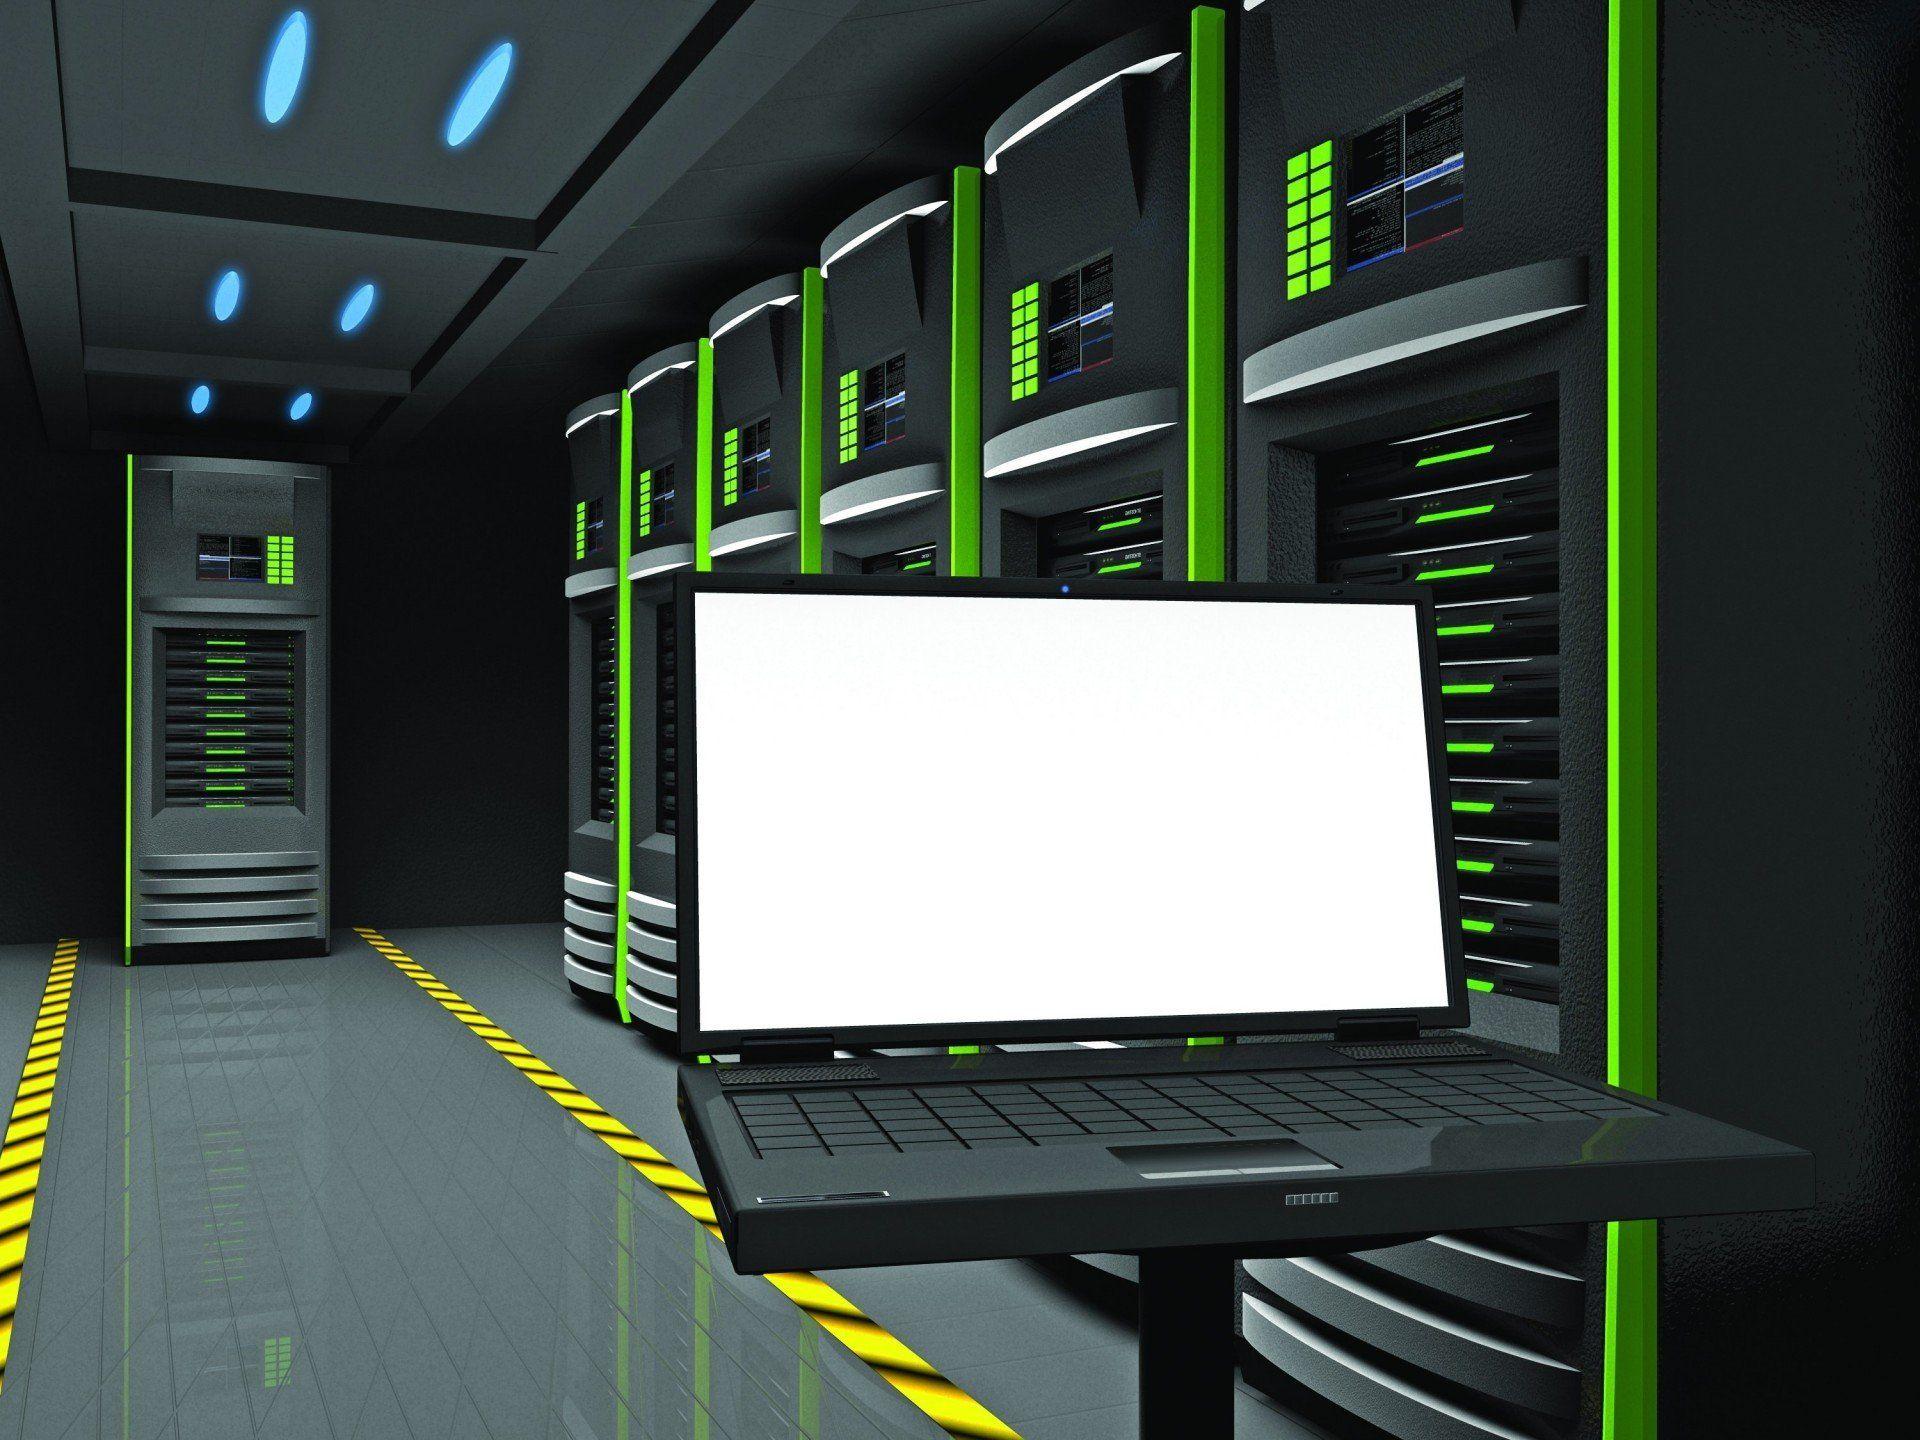 4k Server Wallpapers Top Free 4k Server Backgrounds Wallpaperaccess ...